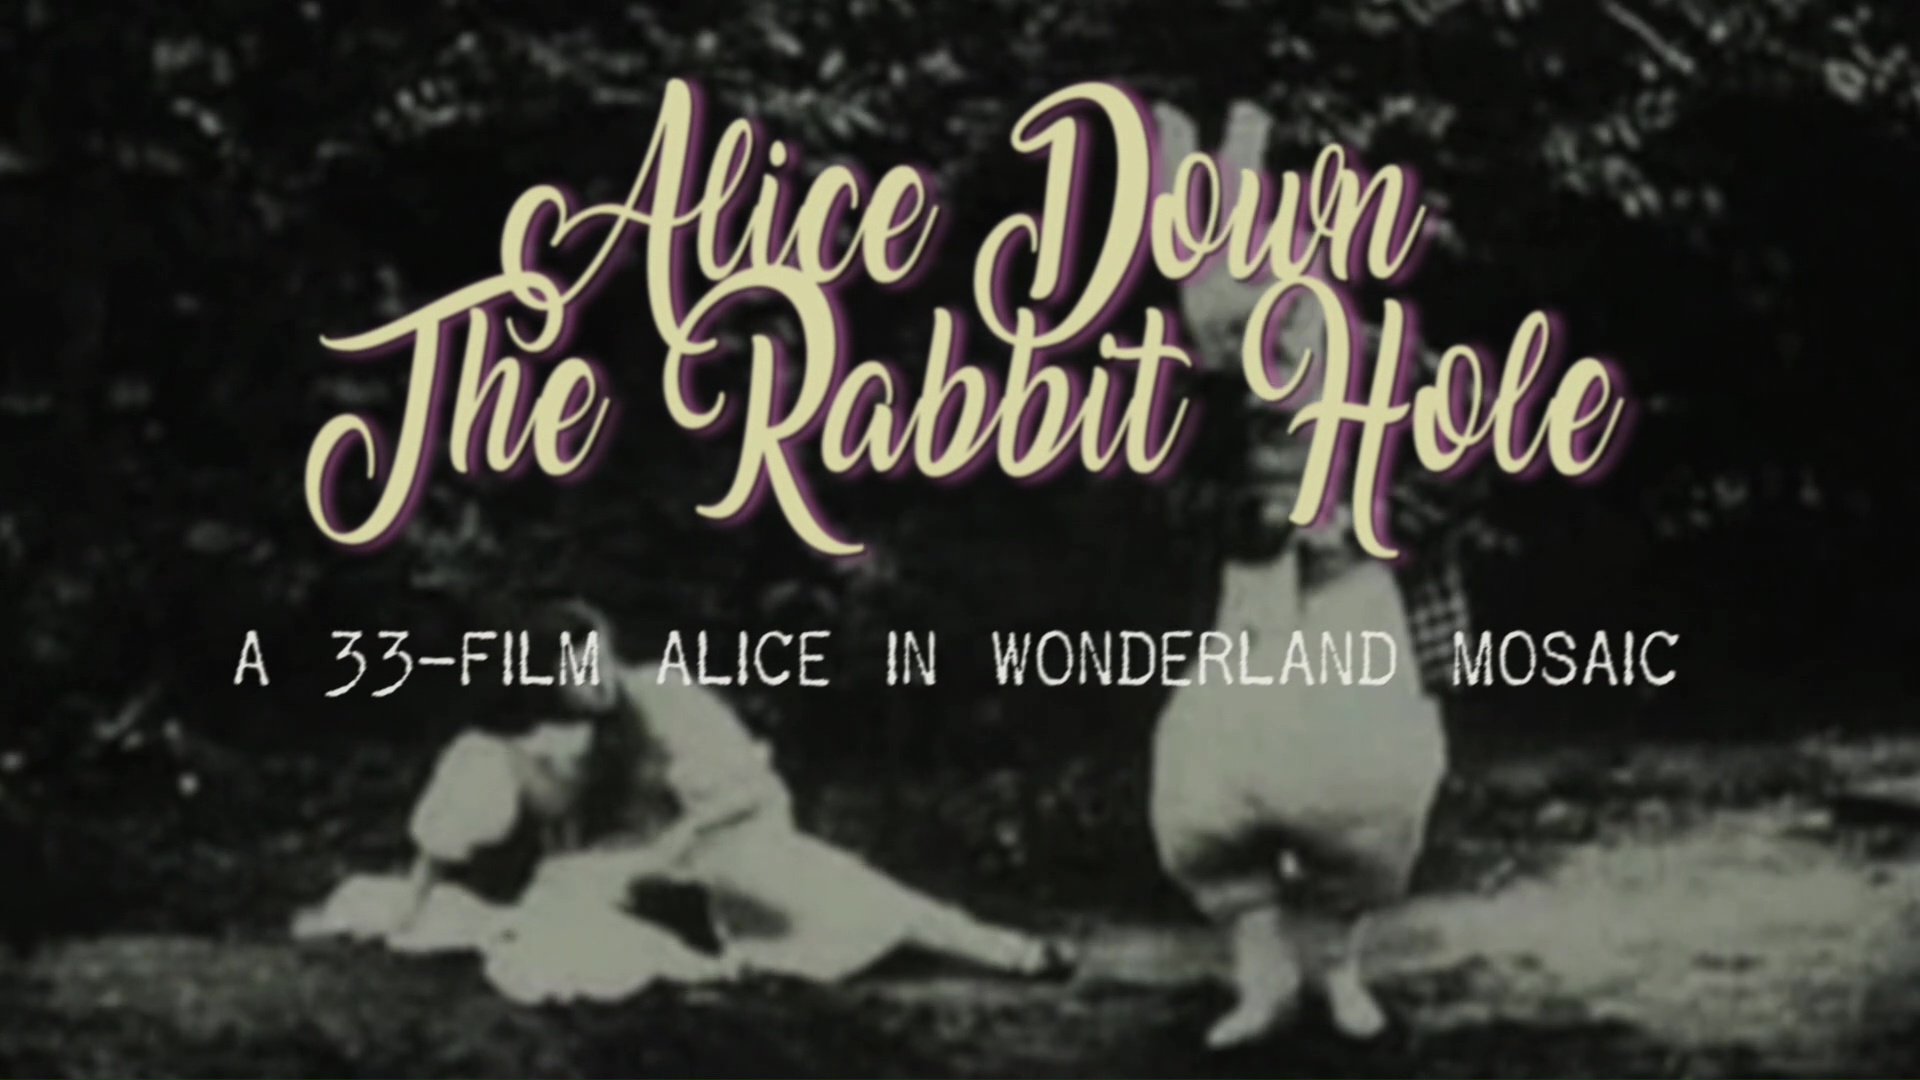 Alice Down The Rabbit Hole